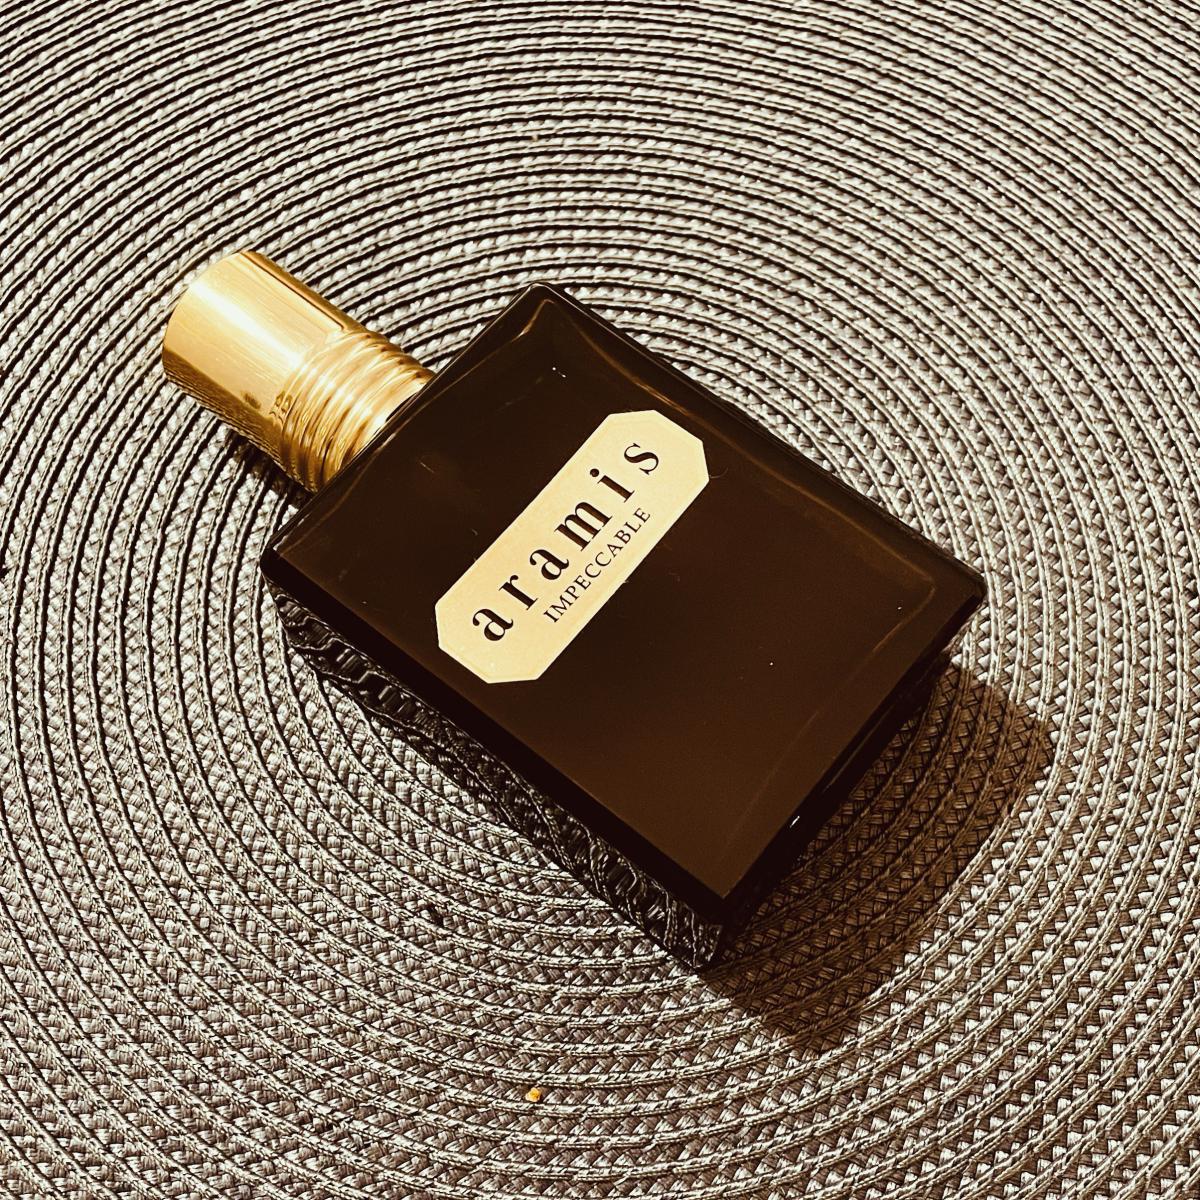 Impeccable Aramis cologne - a fragrance for men 2010